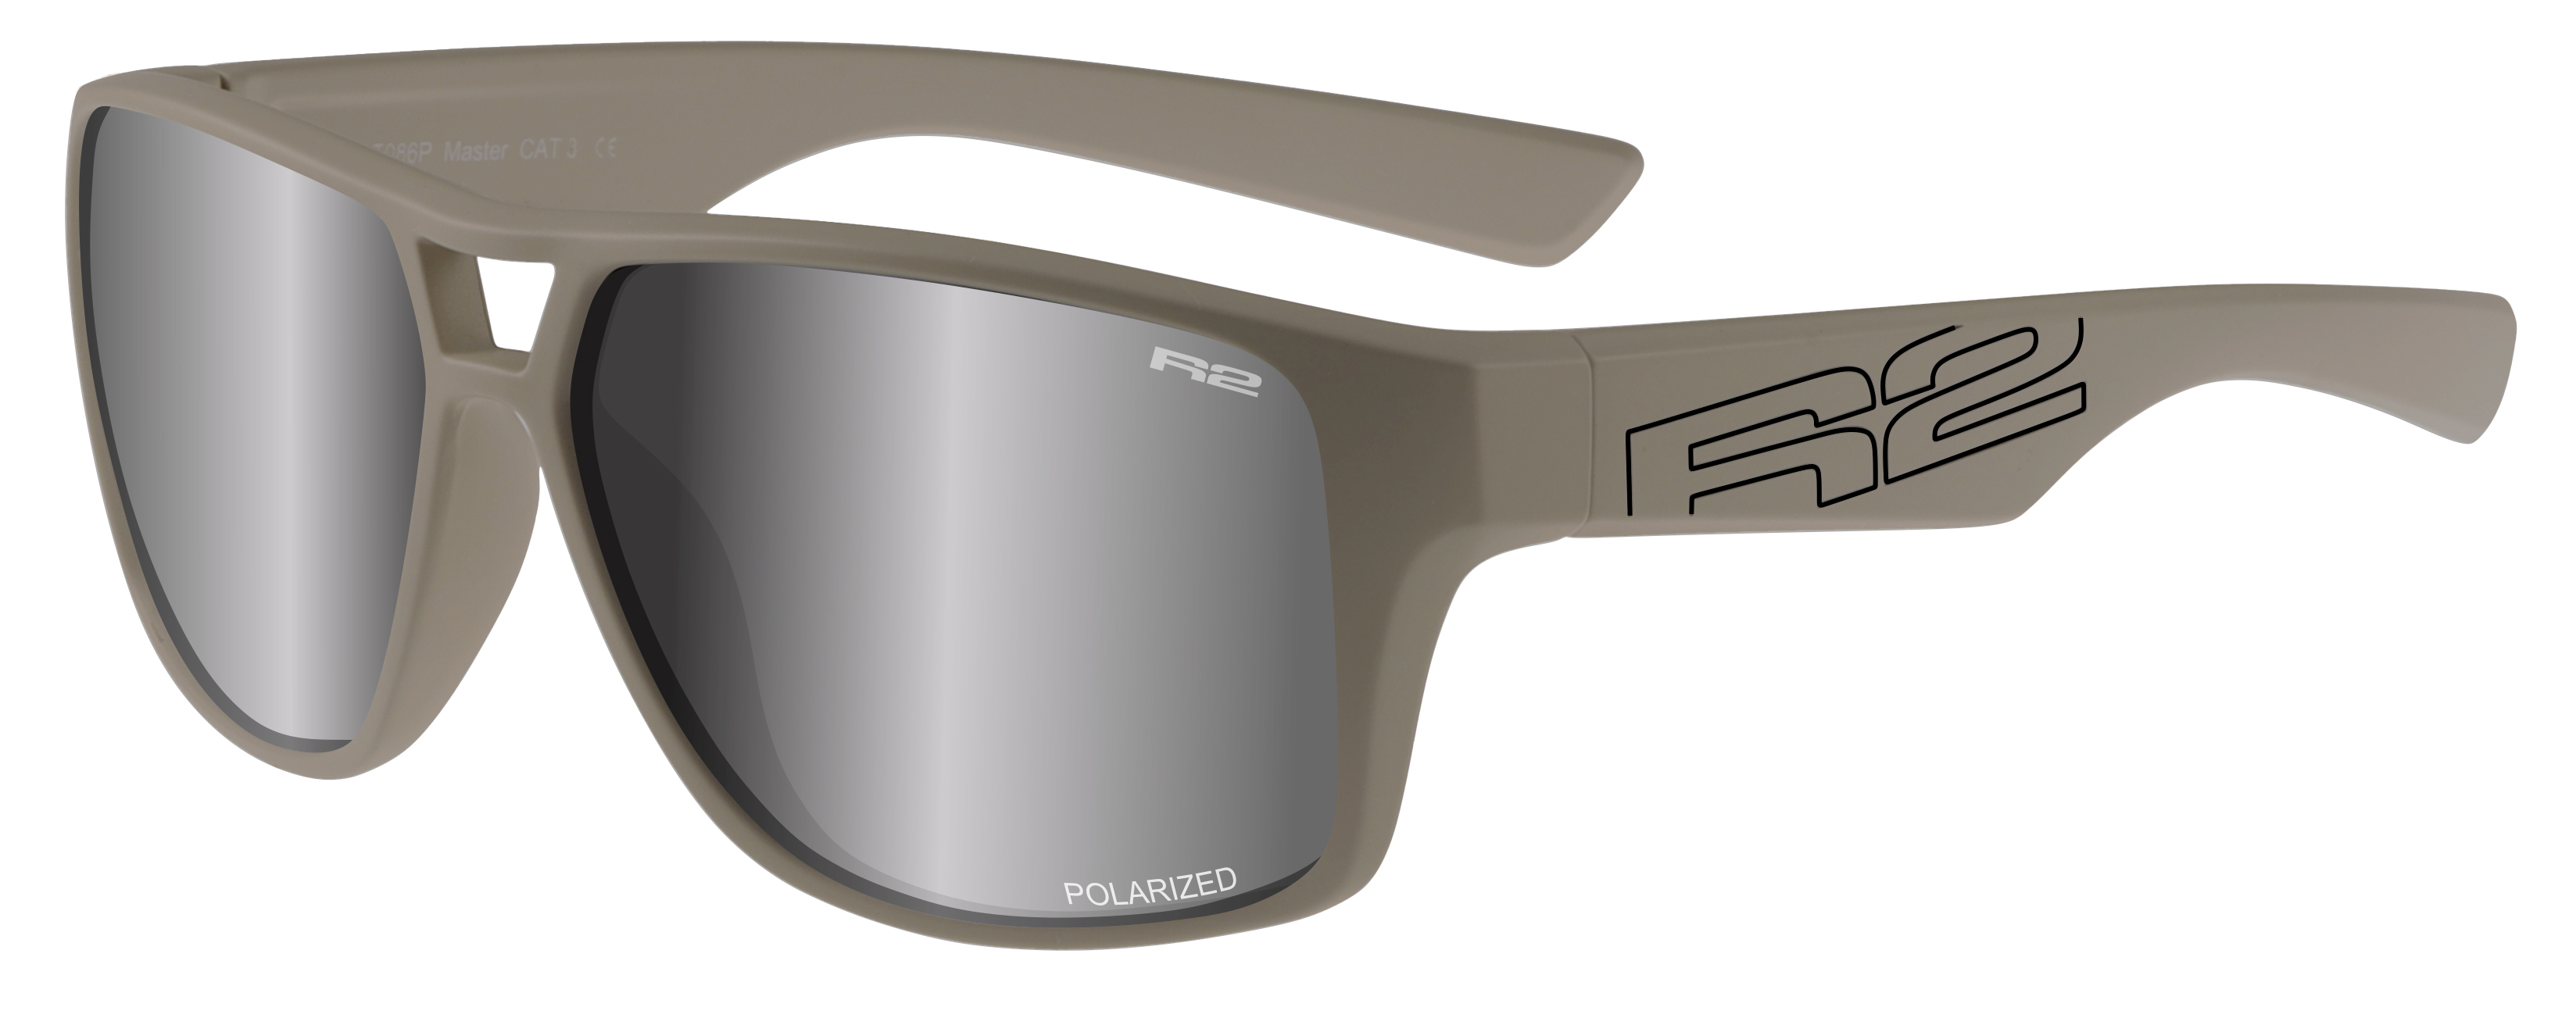 Sport sunglasses R2 MASTER AT086S